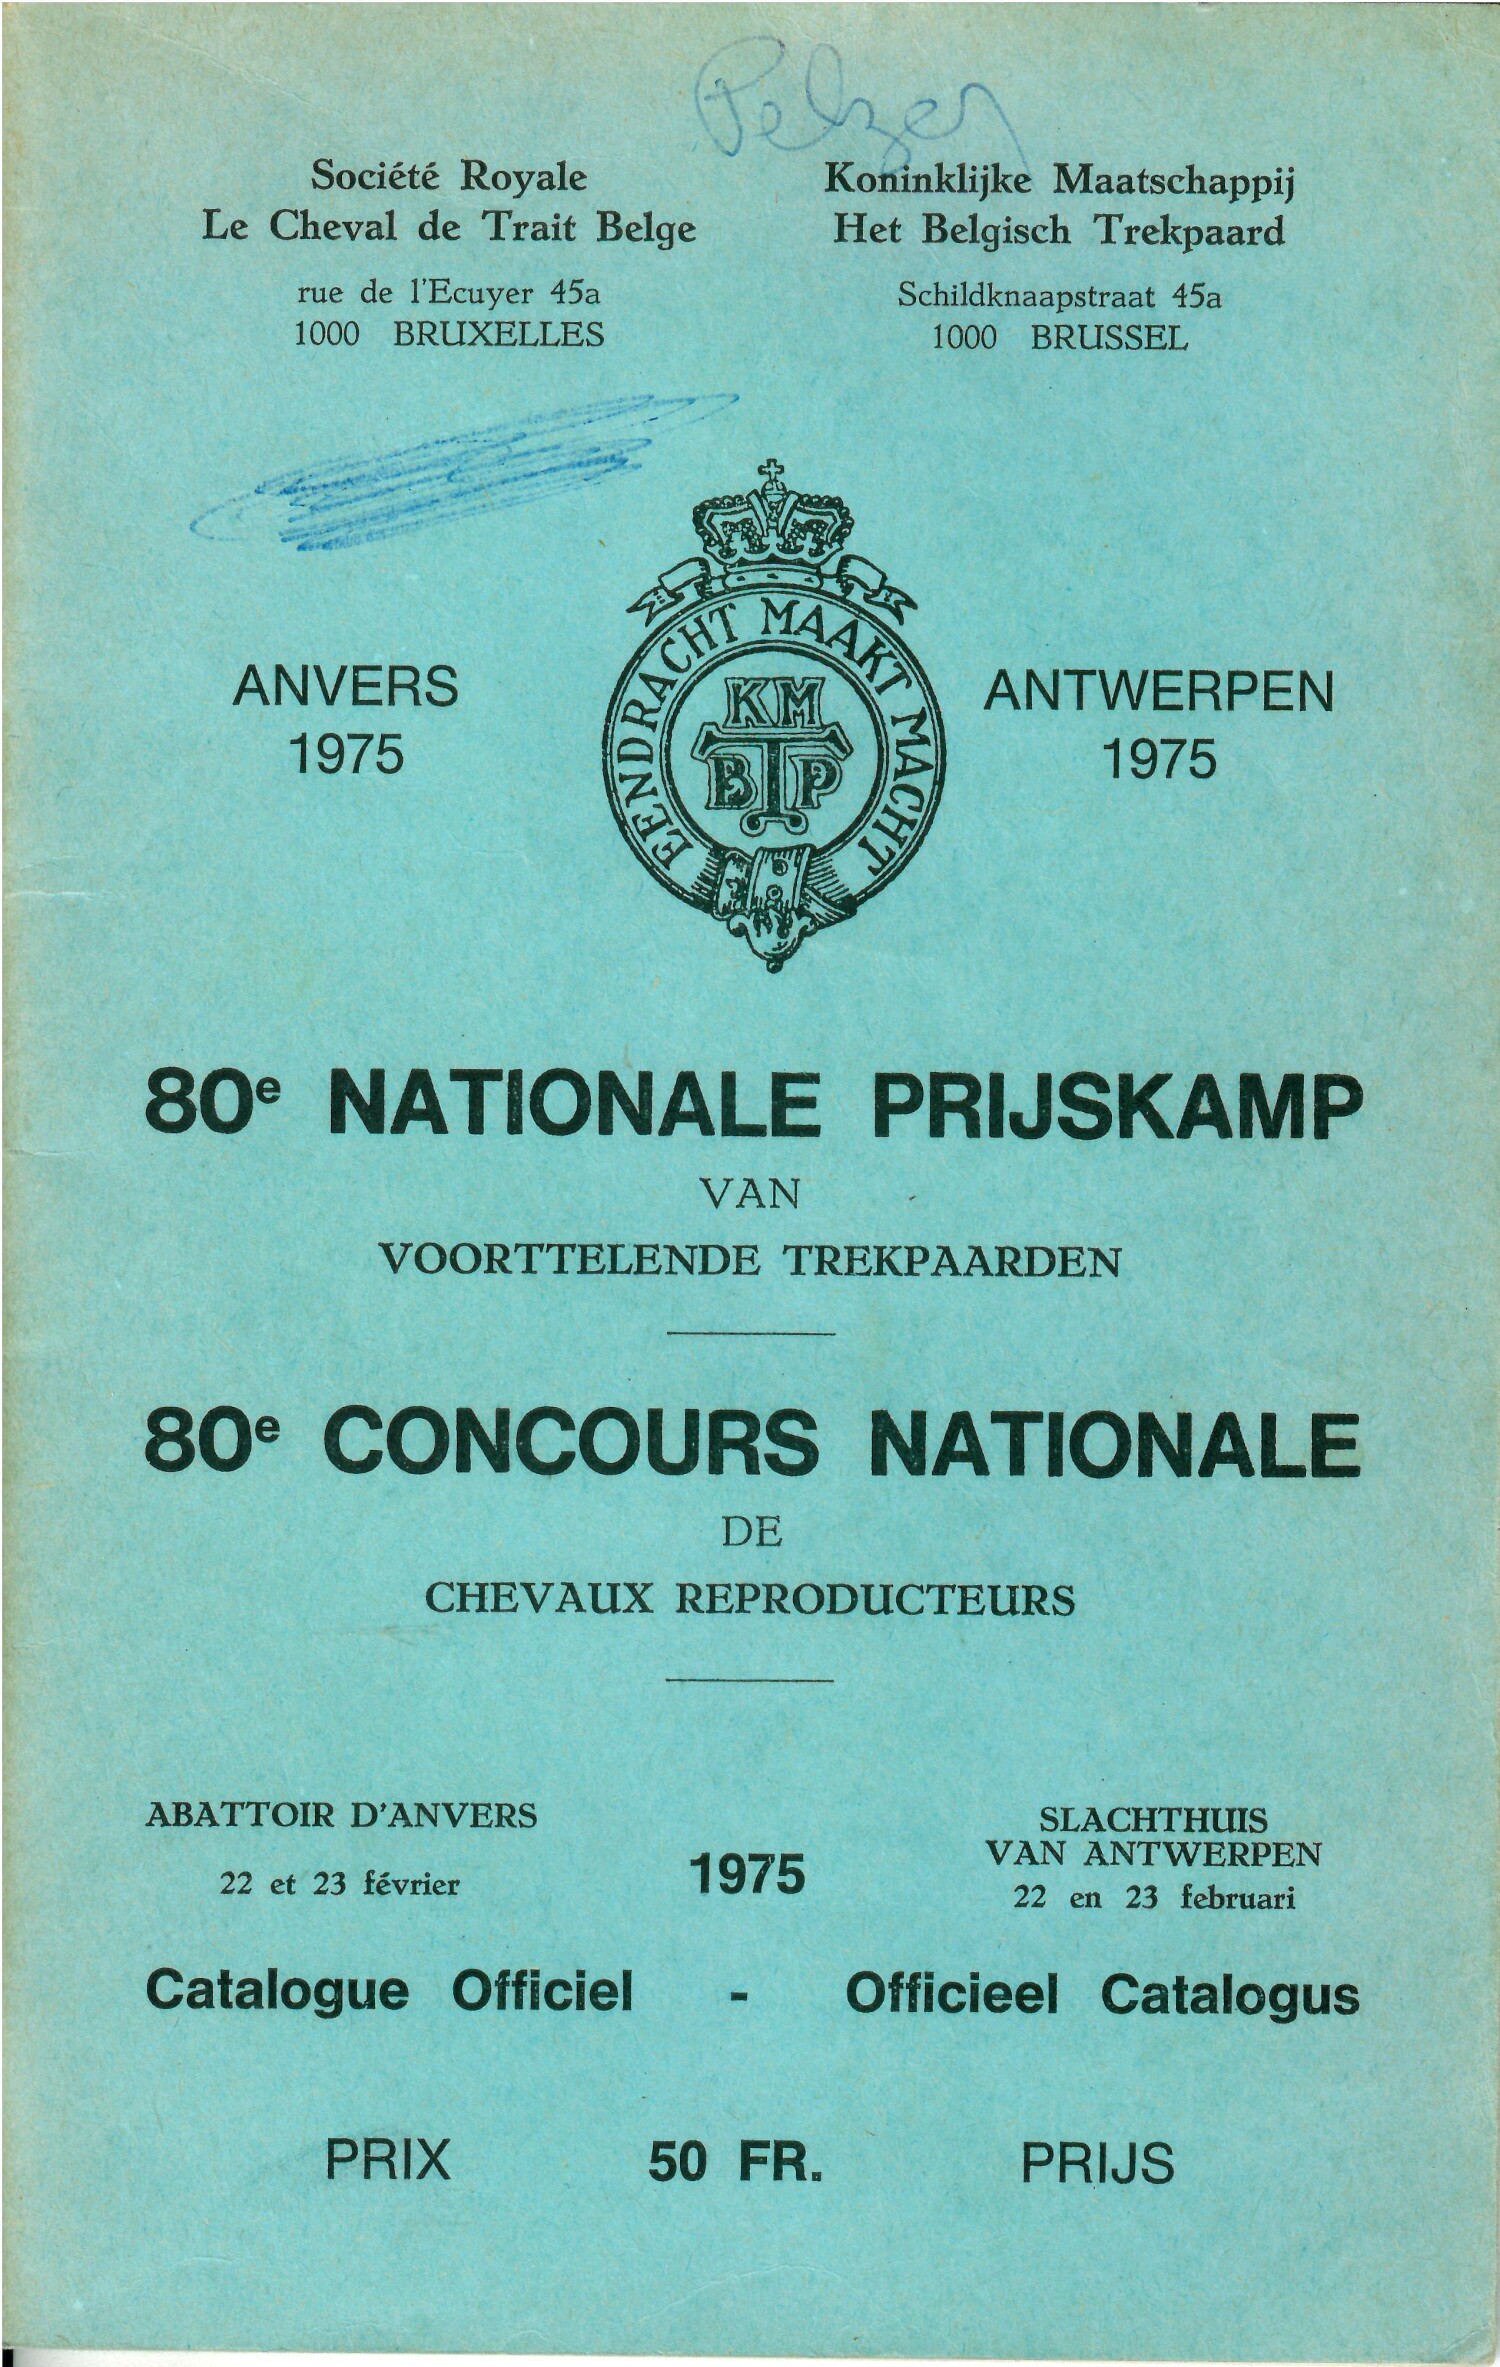 Les Cheval de trait belge et adennes 1975 (Herausgeber RR-R)